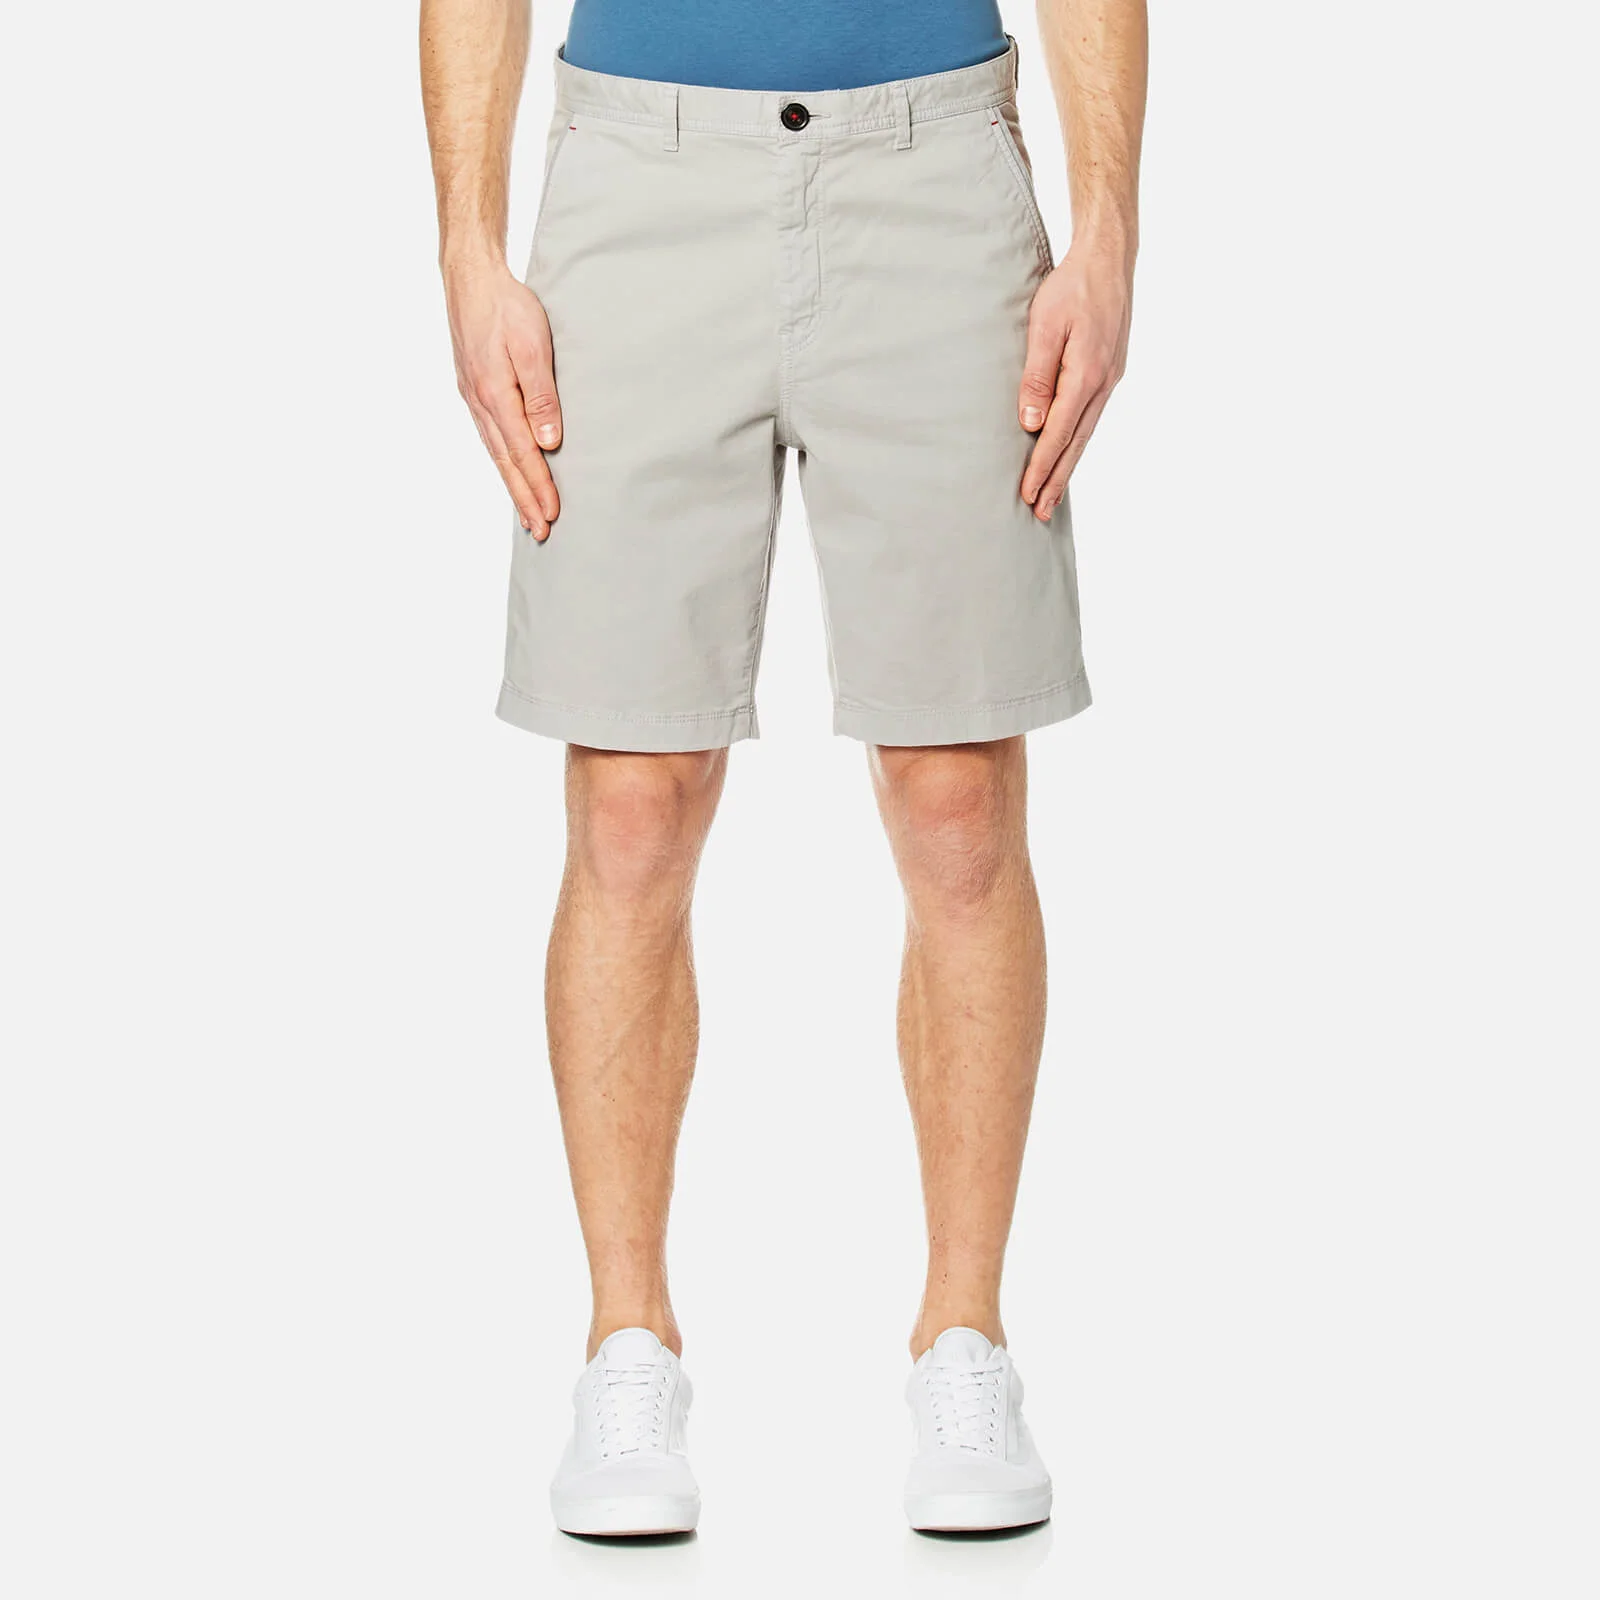 Michael Kors Men's Slim Garment Dye Shorts - Ice Grey Image 1